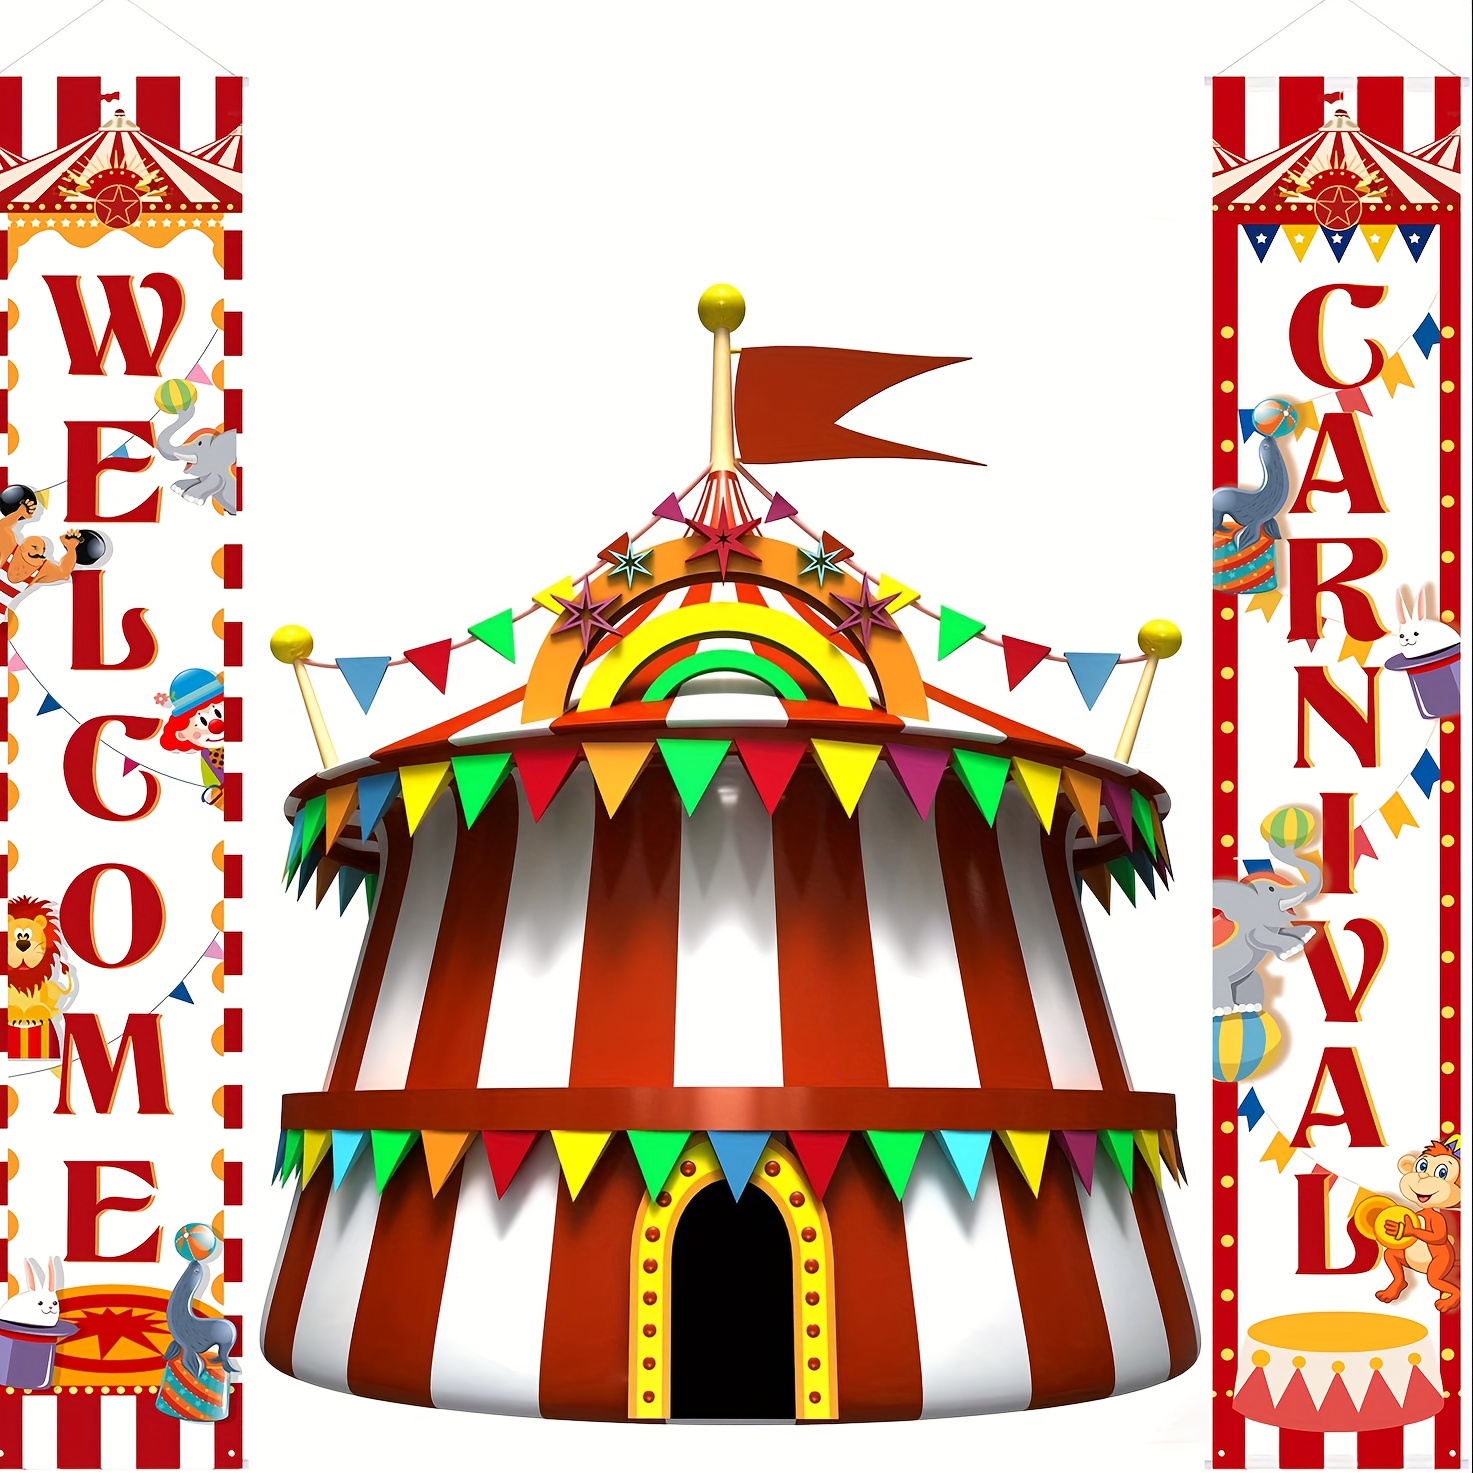 Juegos para beber - Circus Fiesta